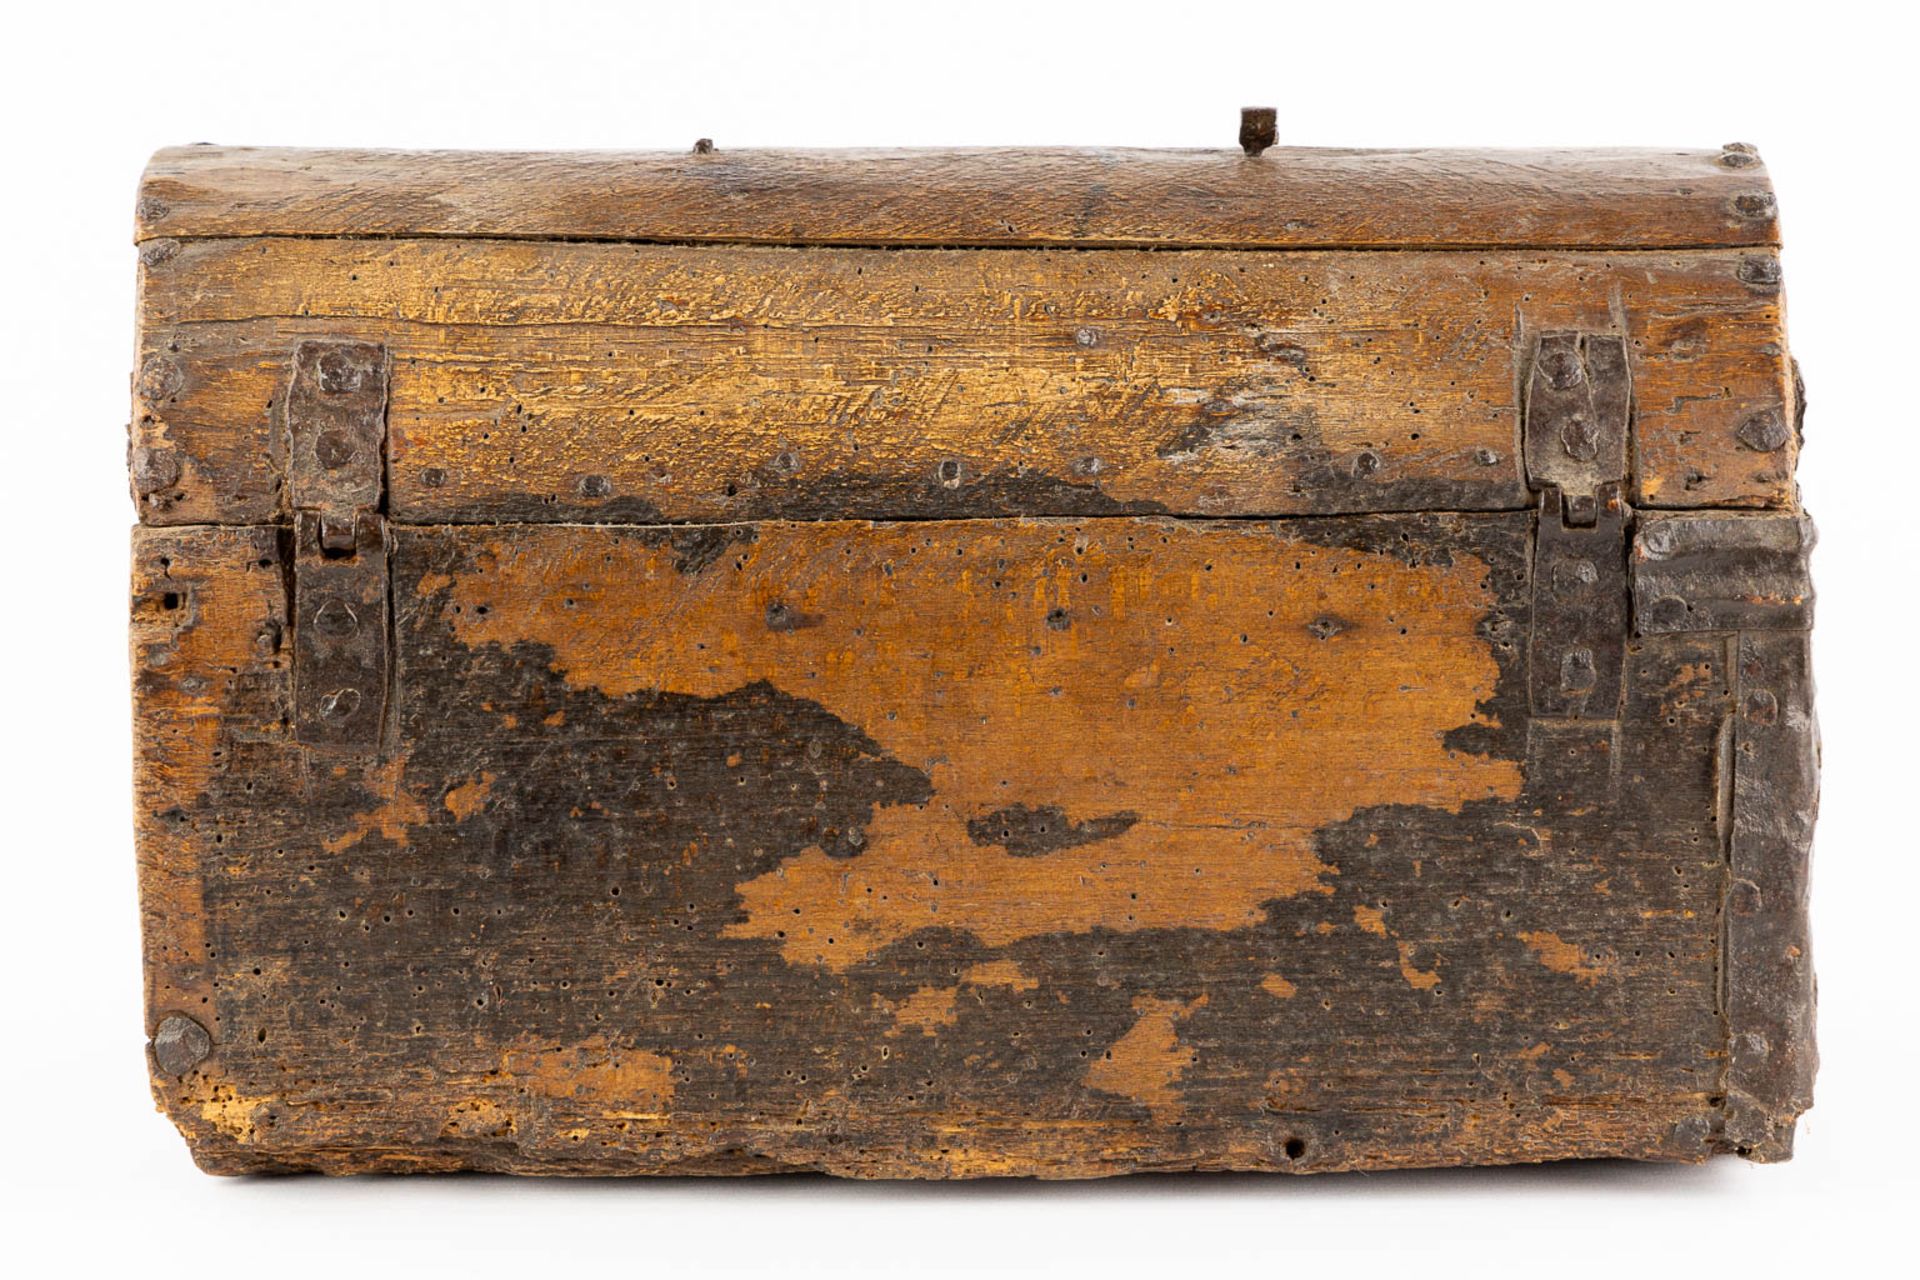 An antique money box or storage chest, wood and wrought iron, 16th/17th C. (L:20 x W:36 x H:22 cm) - Bild 5 aus 14